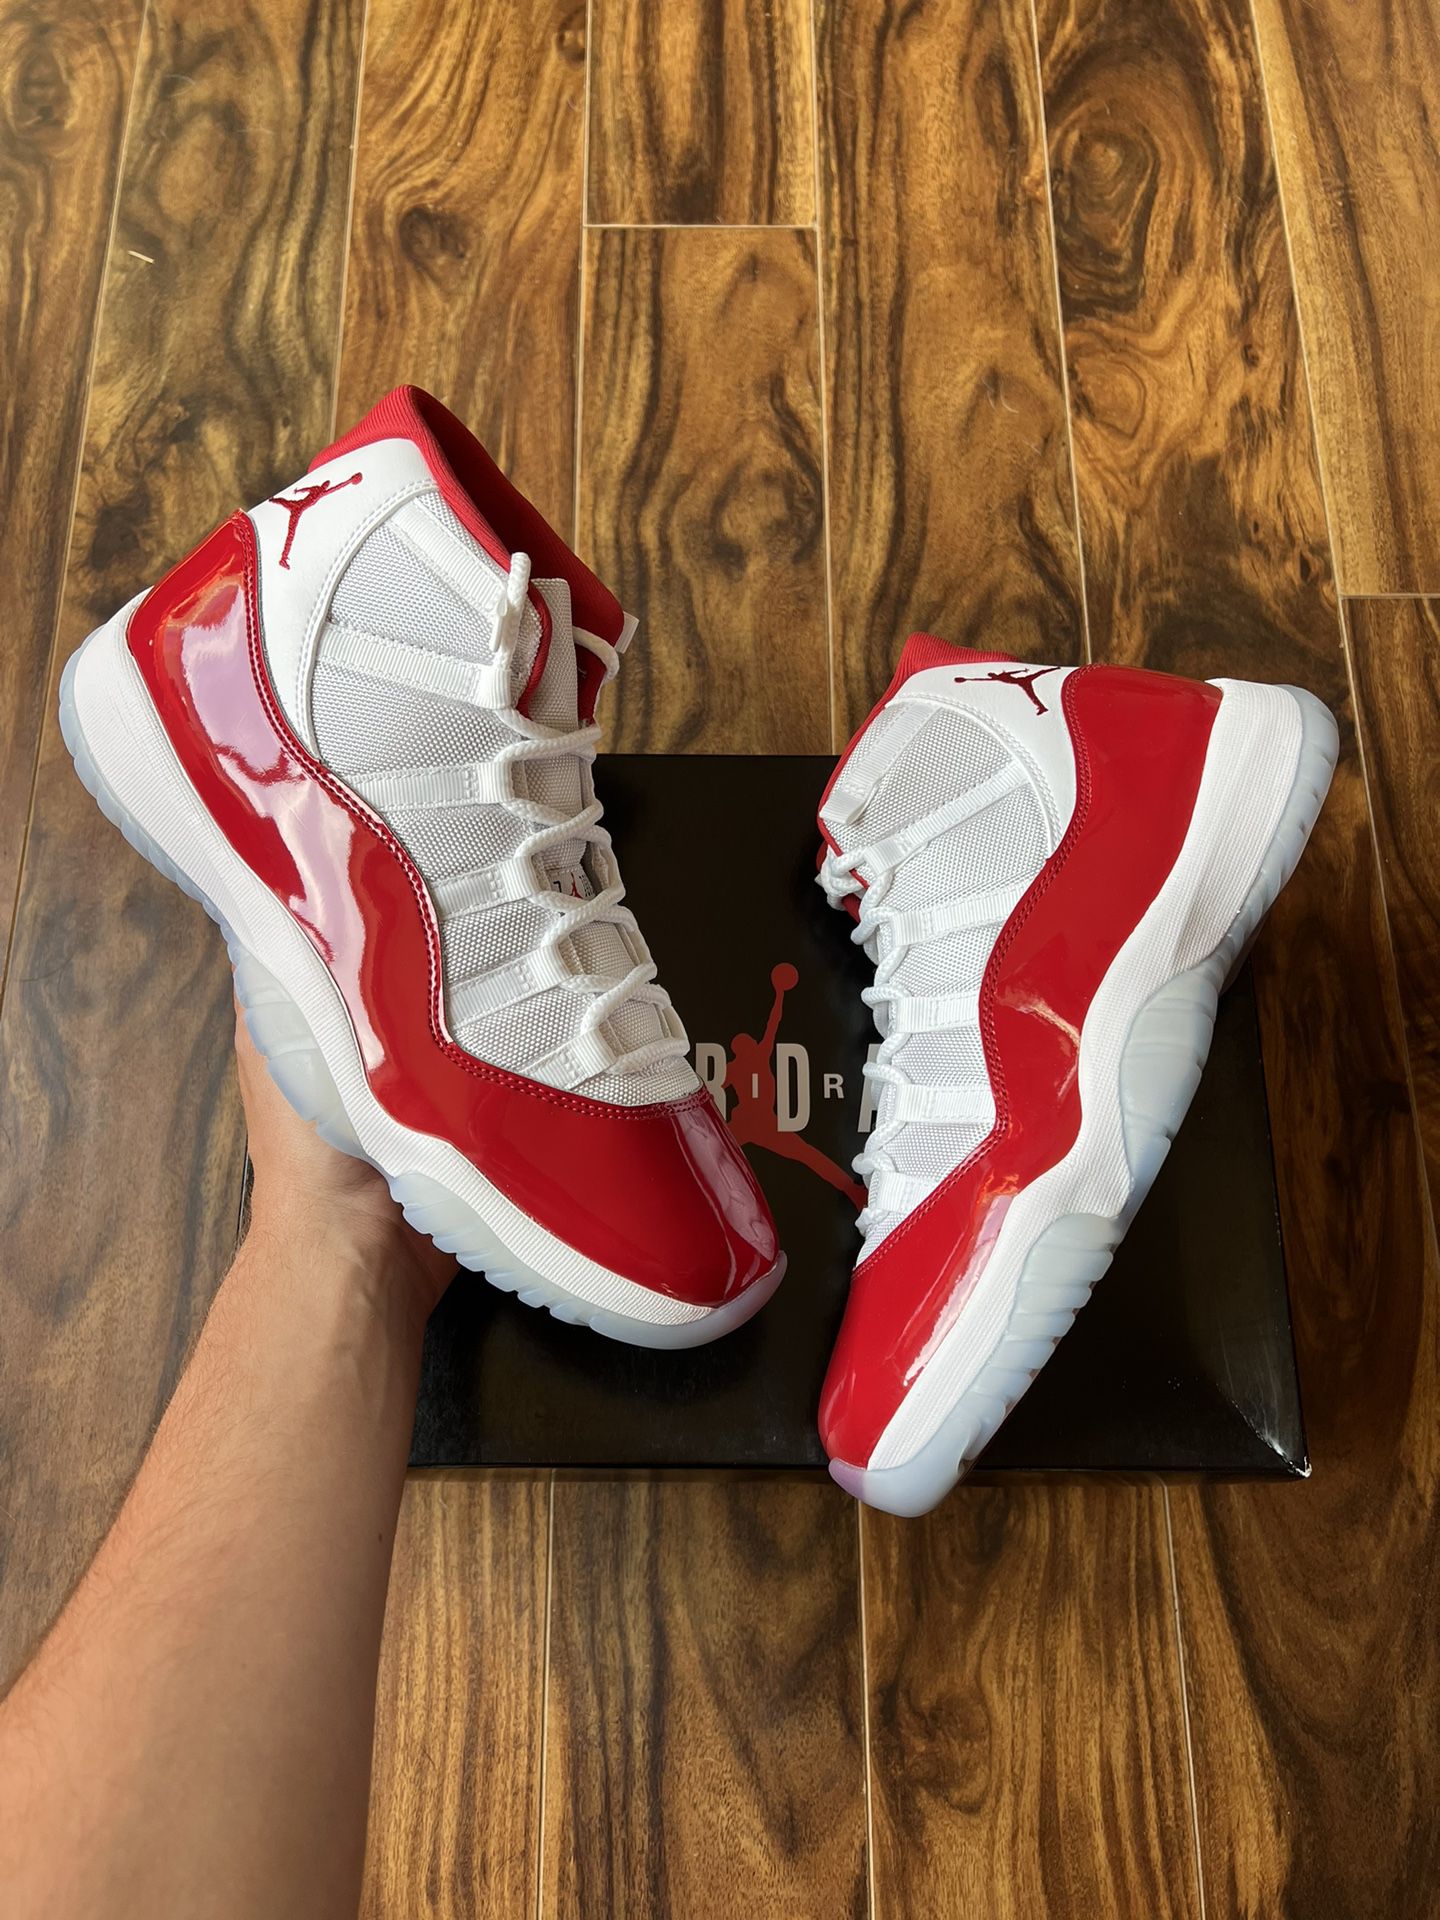 Jordan 11 Retro ‘Cherry Red’ Size 10.5M